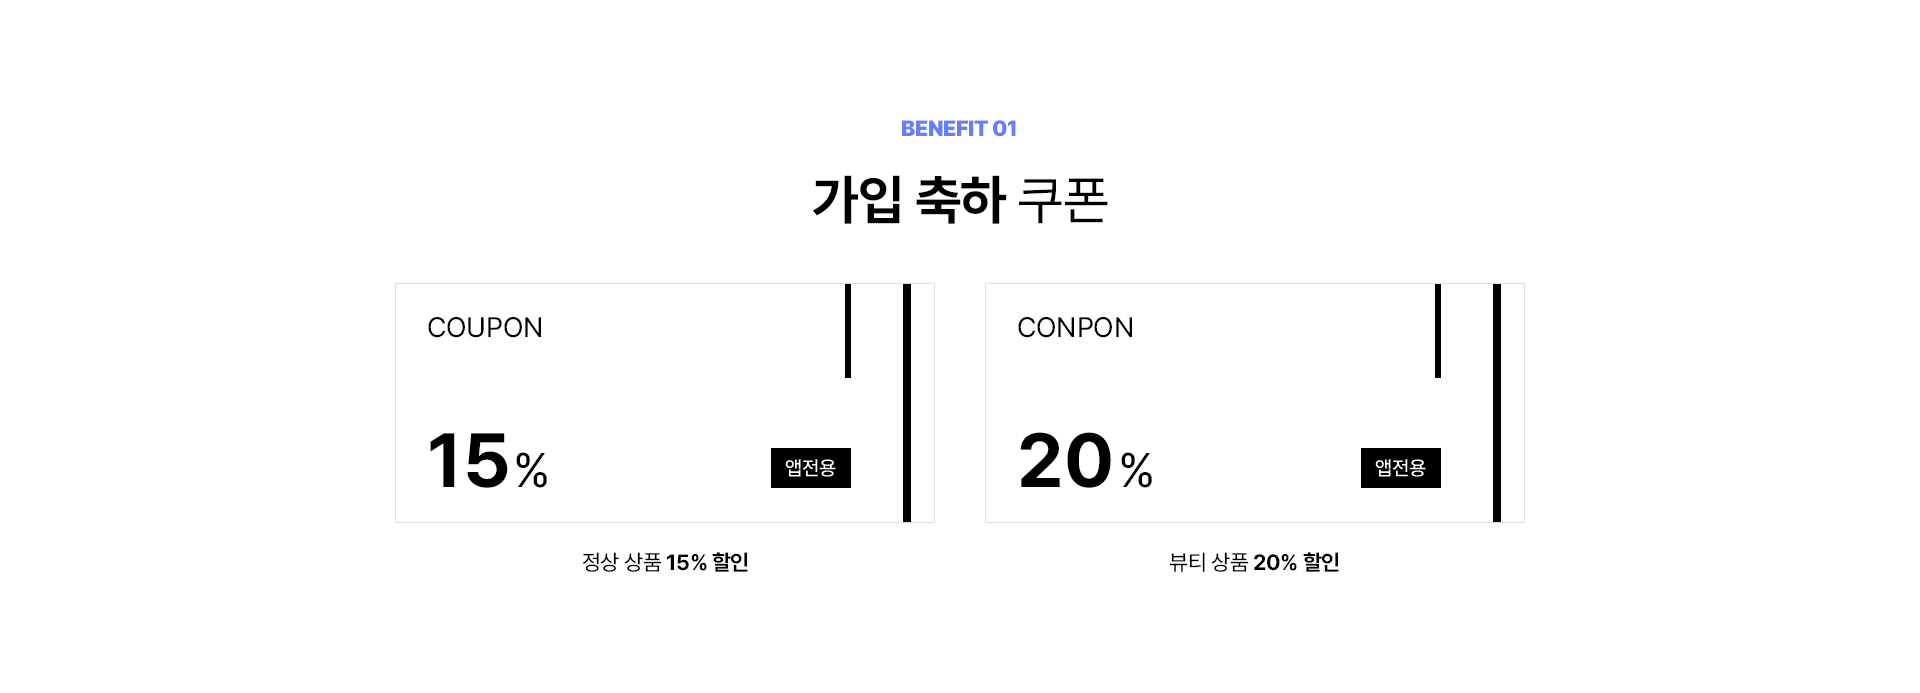 BENEFIT01 가입 축하 쿠폰 정상 상품 15% 할인, 가입 축하 쿠폰 정상 상품 15% 할인(뷰티 카테고리)